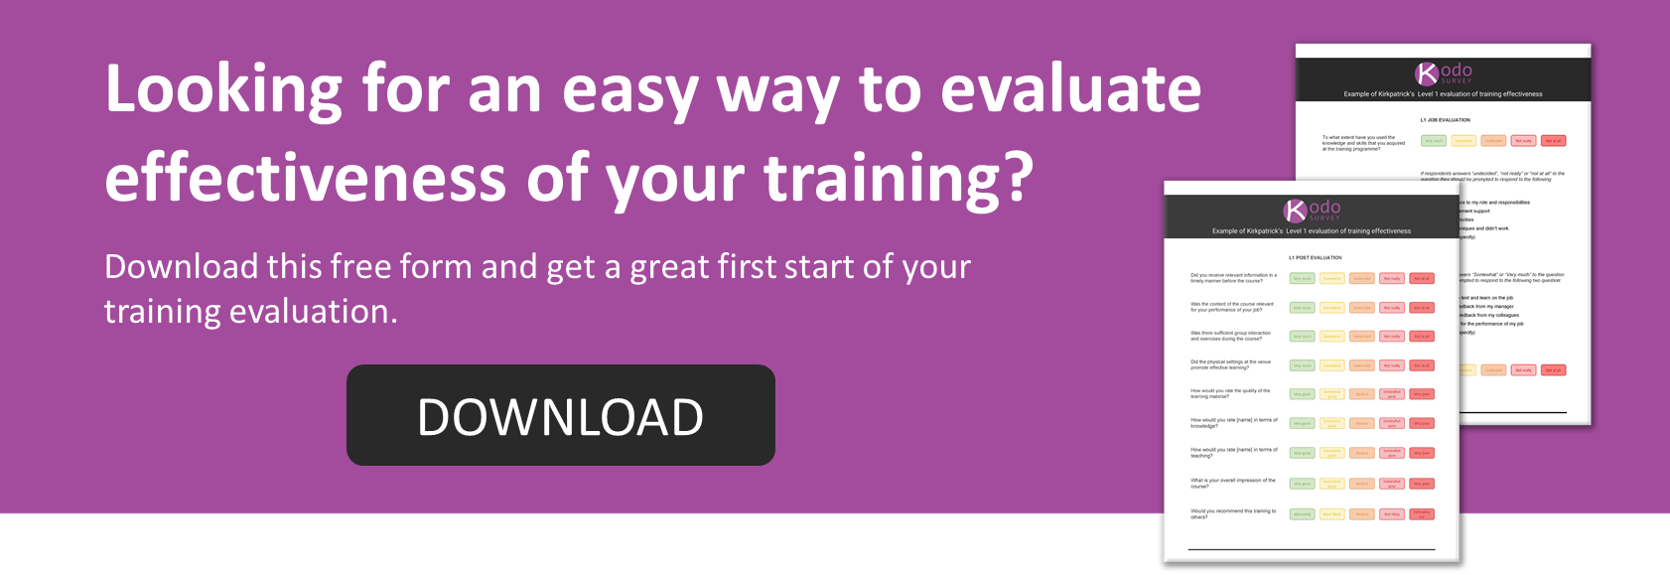 https://insights.kodosurvey.com/training-effectiveness-evaluation-form